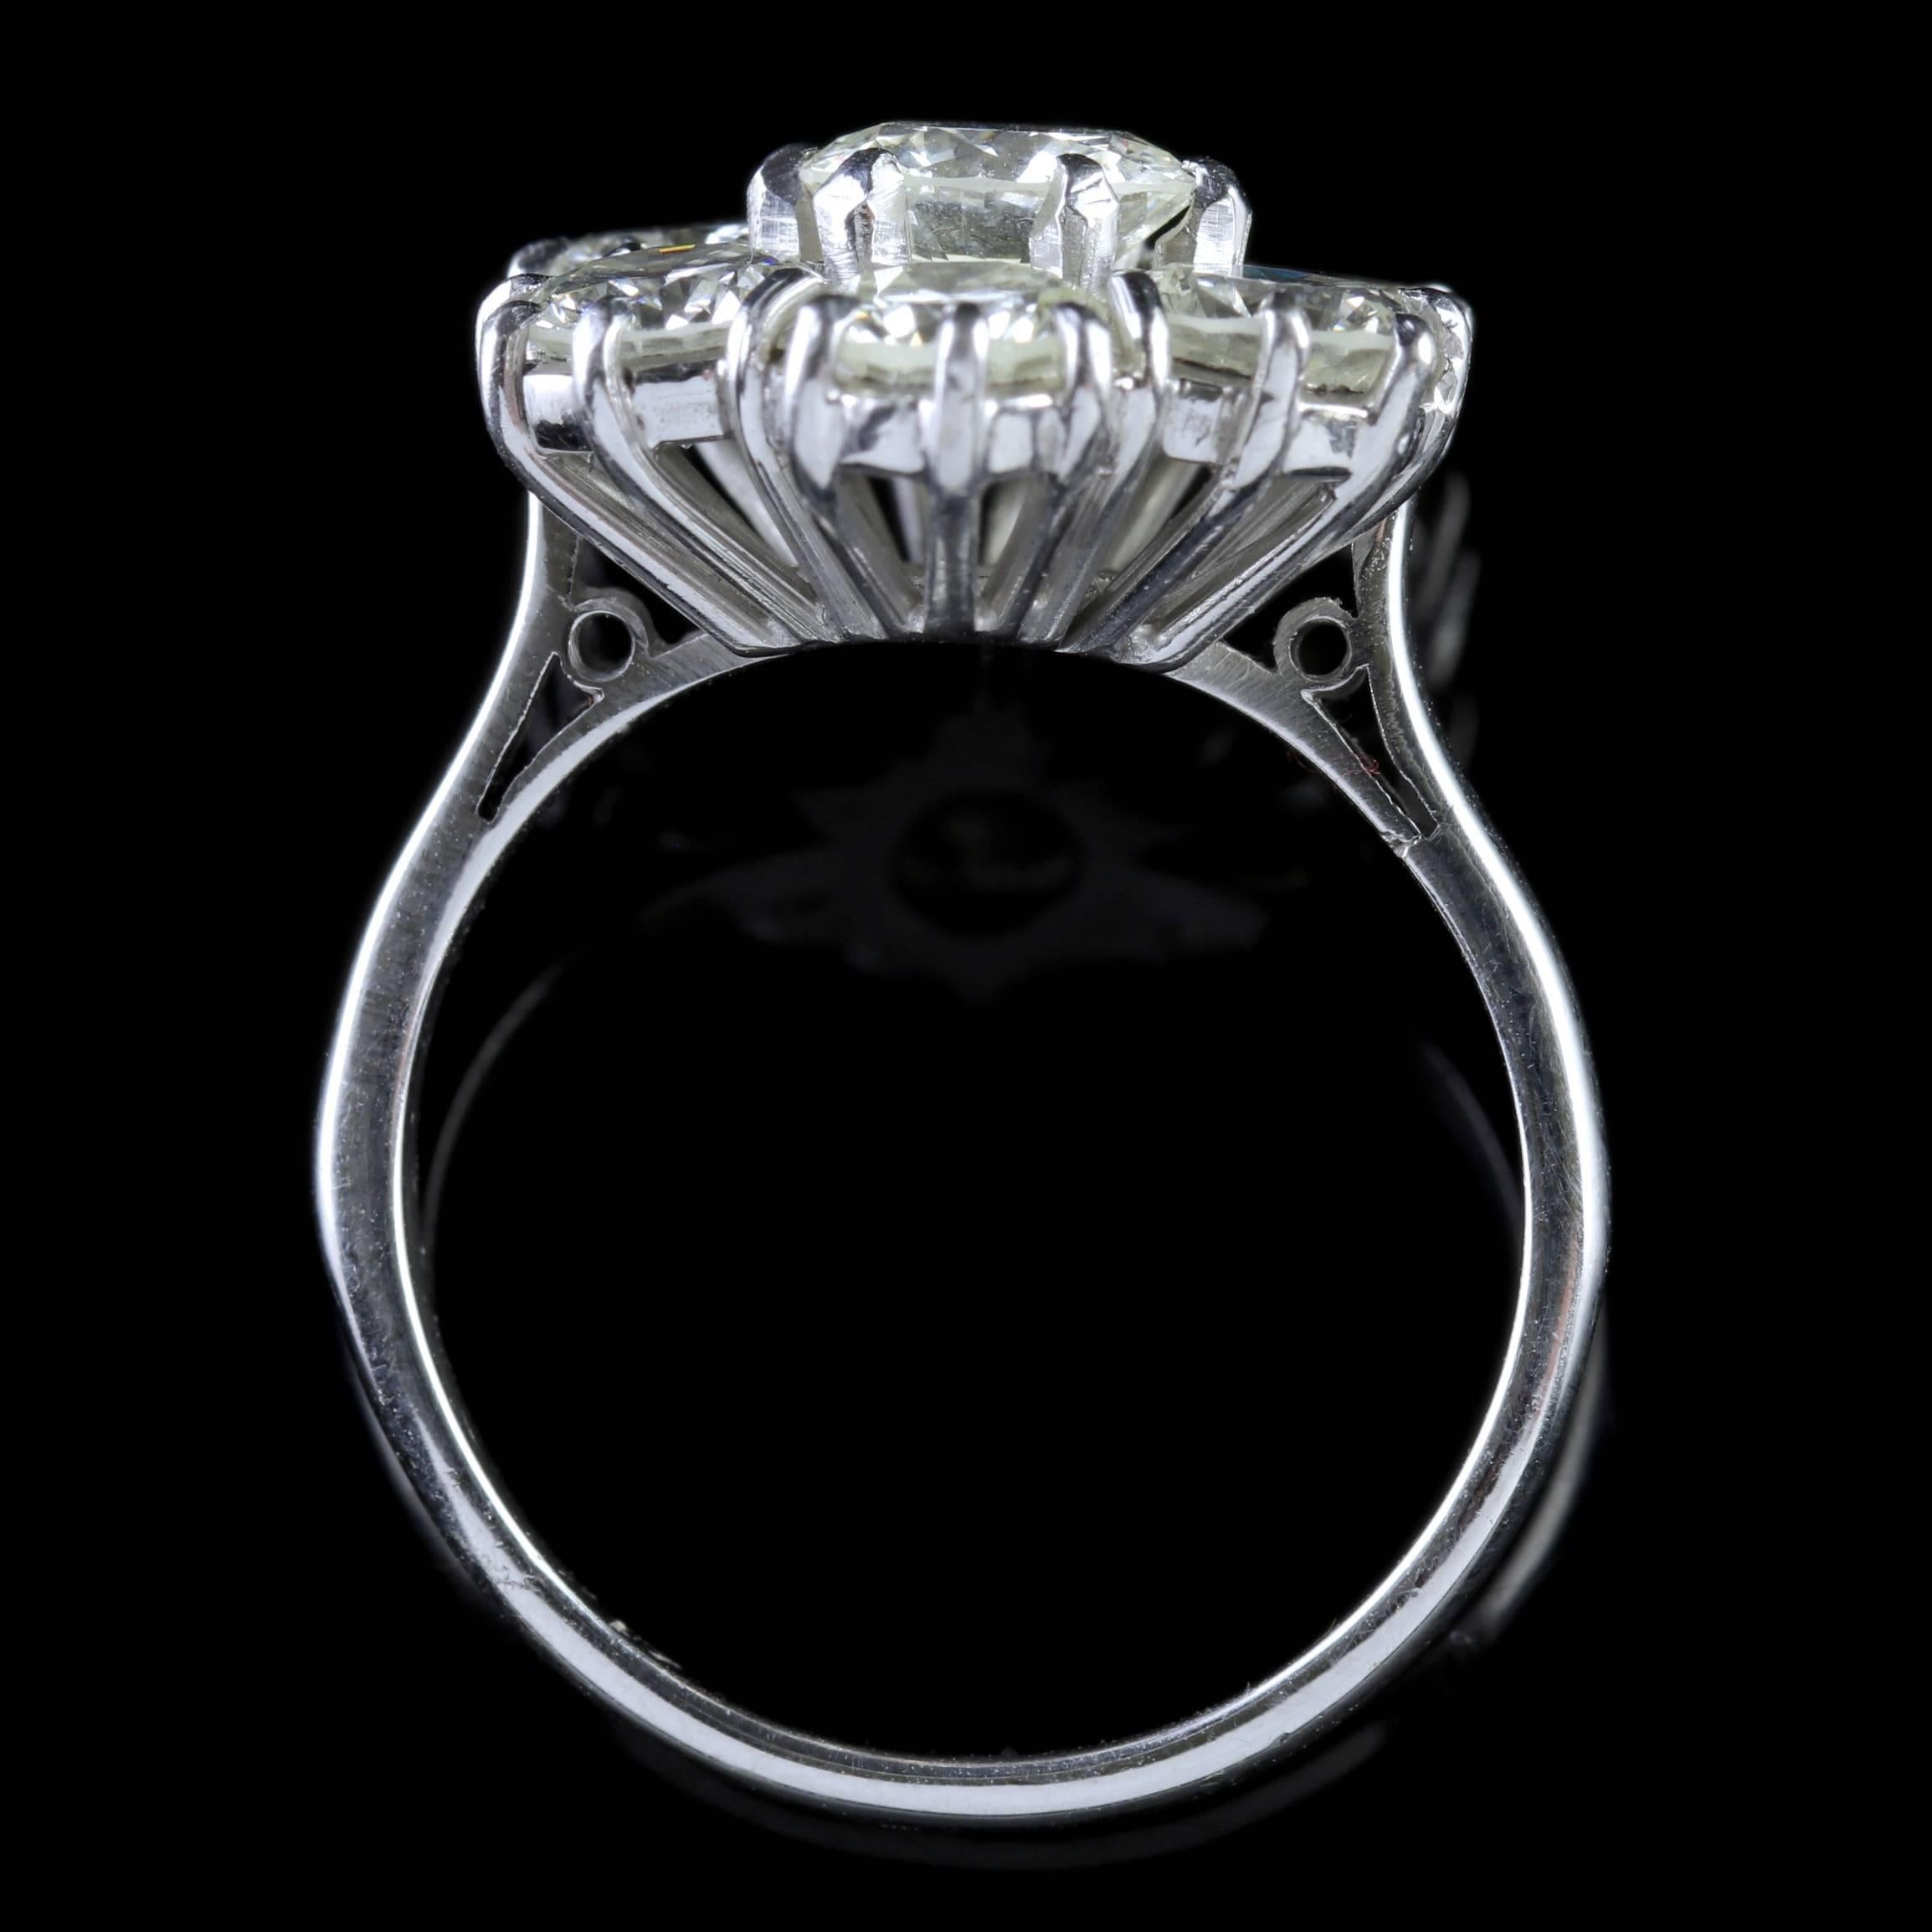  Diamond Cluster Engagement Ring 4 Carat of Diamonds Vs1 2